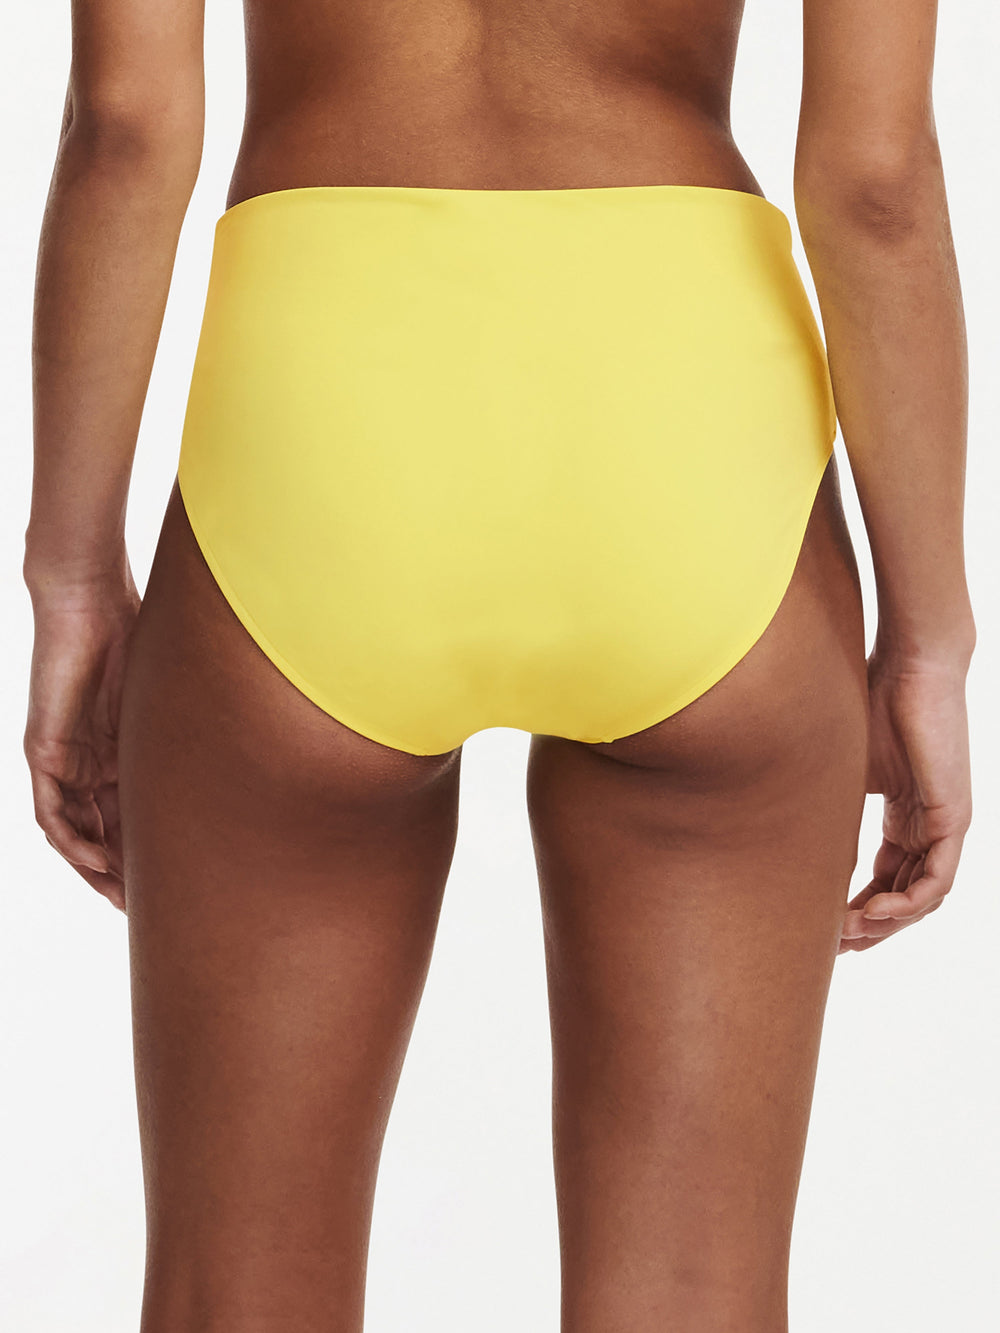 Chantelle Swimwear Inspire Full Brief - Sunshine Full Bikini Brief Chantelle 